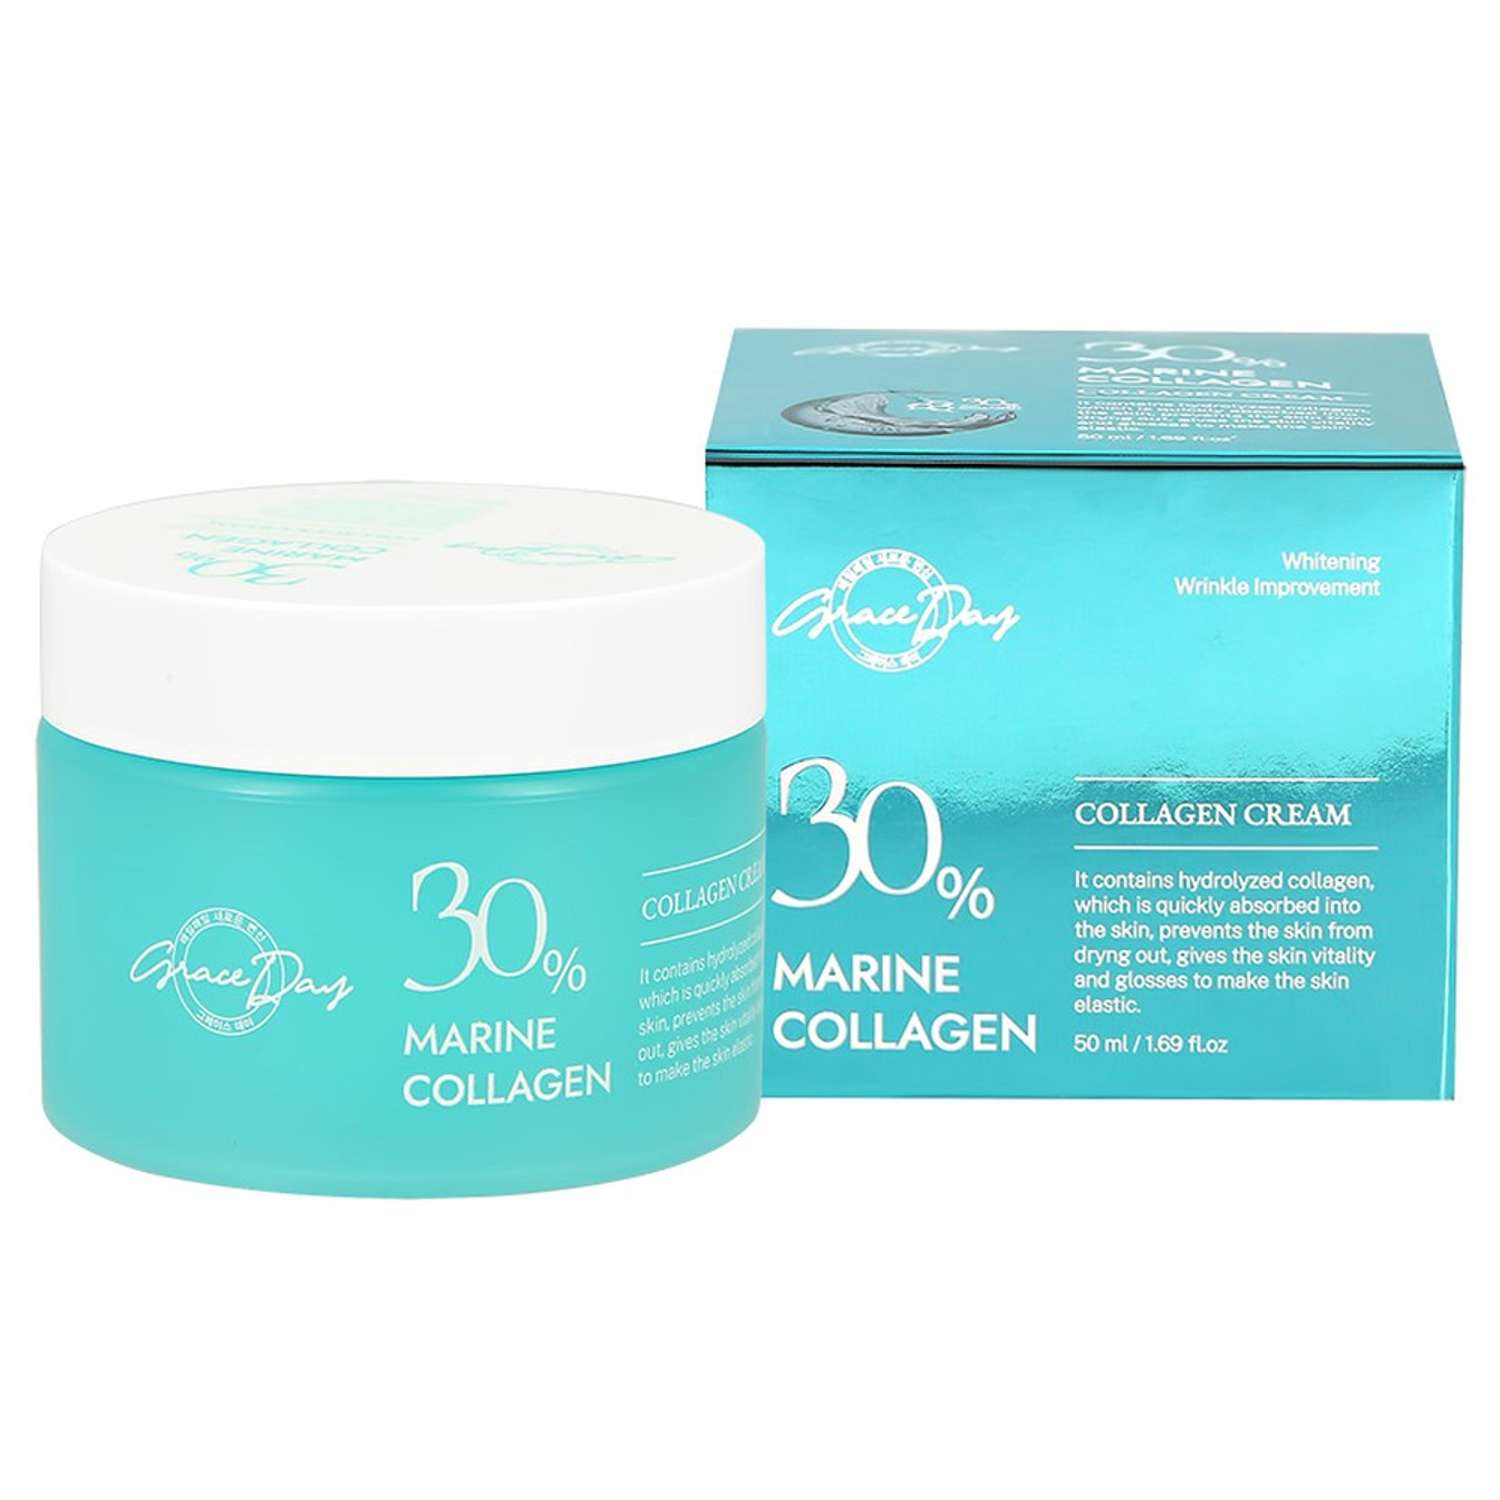 Крем для лица Grace day 30% marine collagen с морским коллагеном 50 мл - фото 4